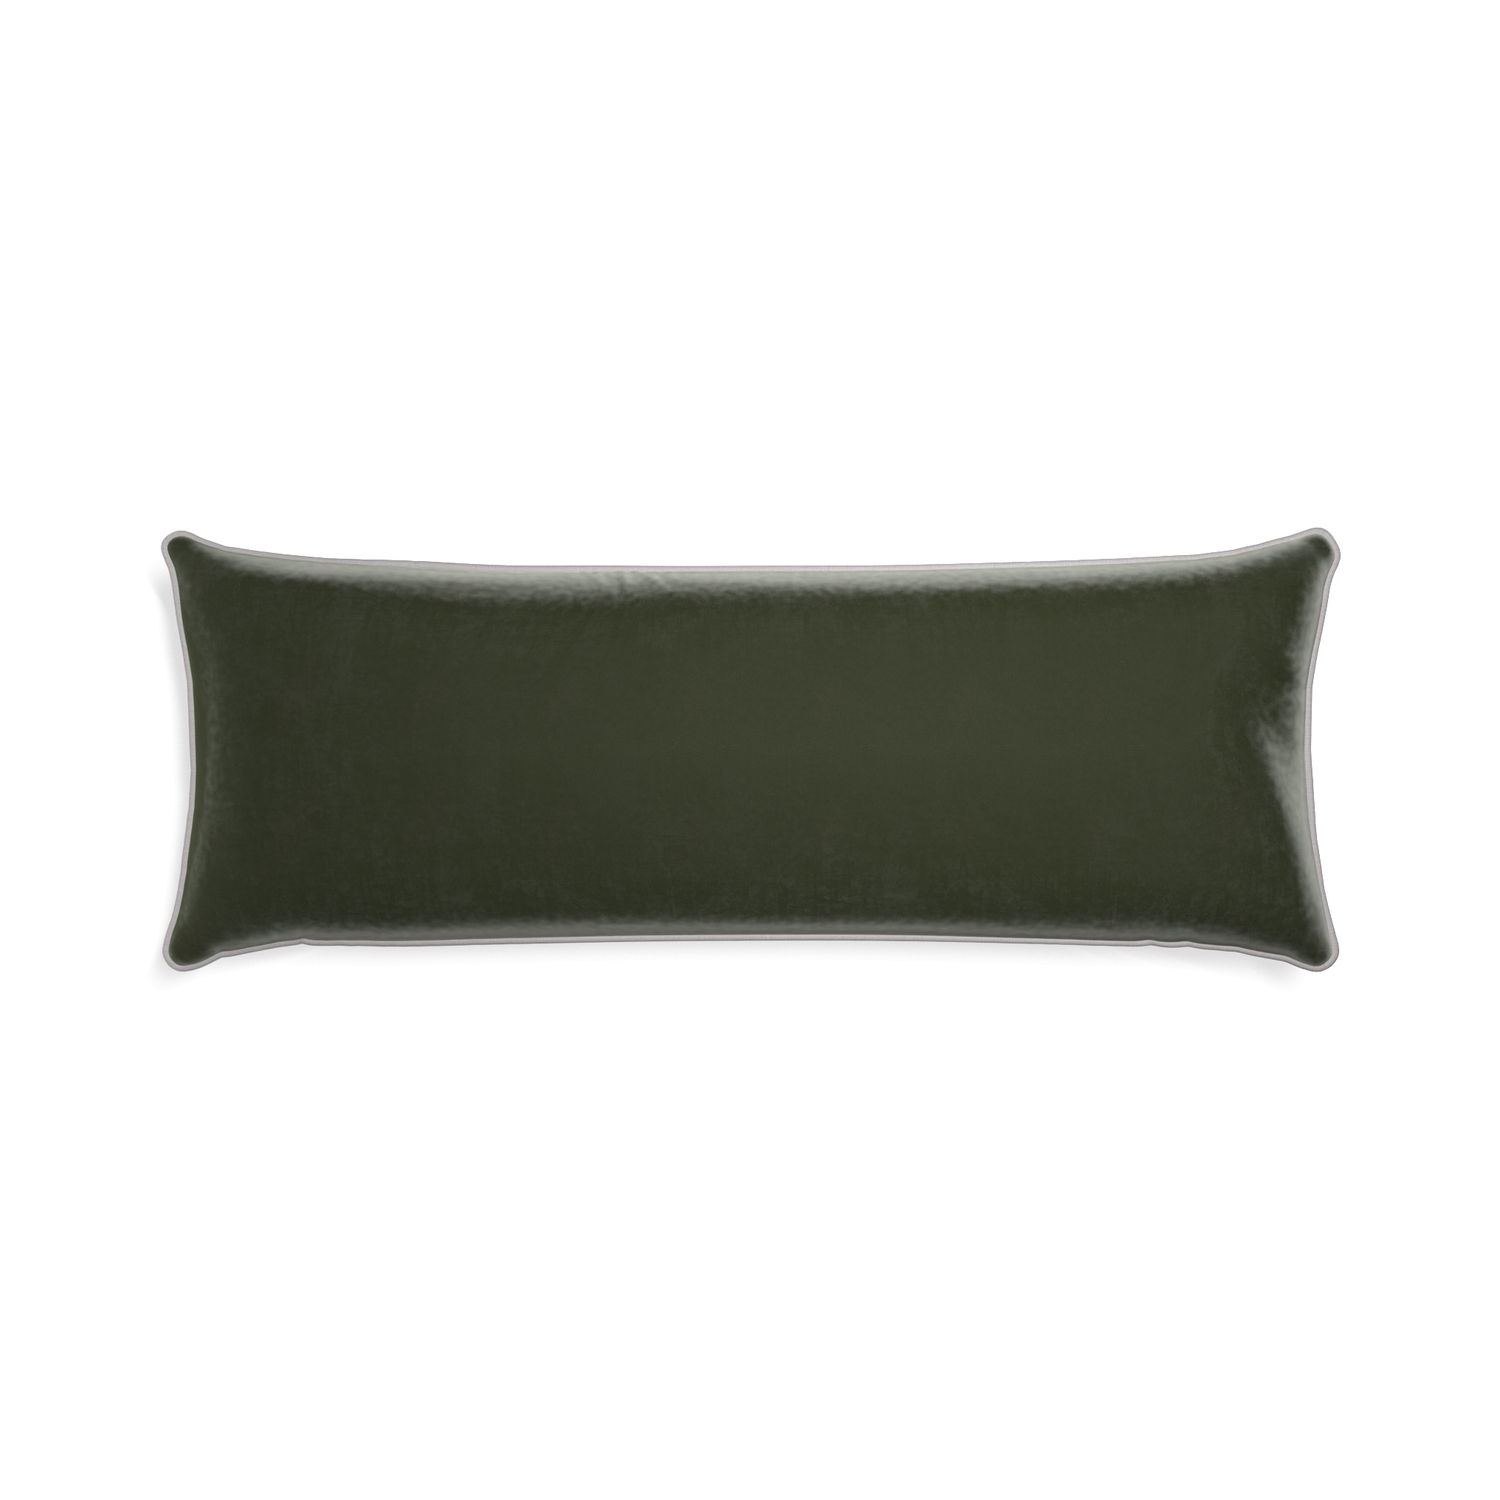 rectangle fern green velvet pillow with gray piping